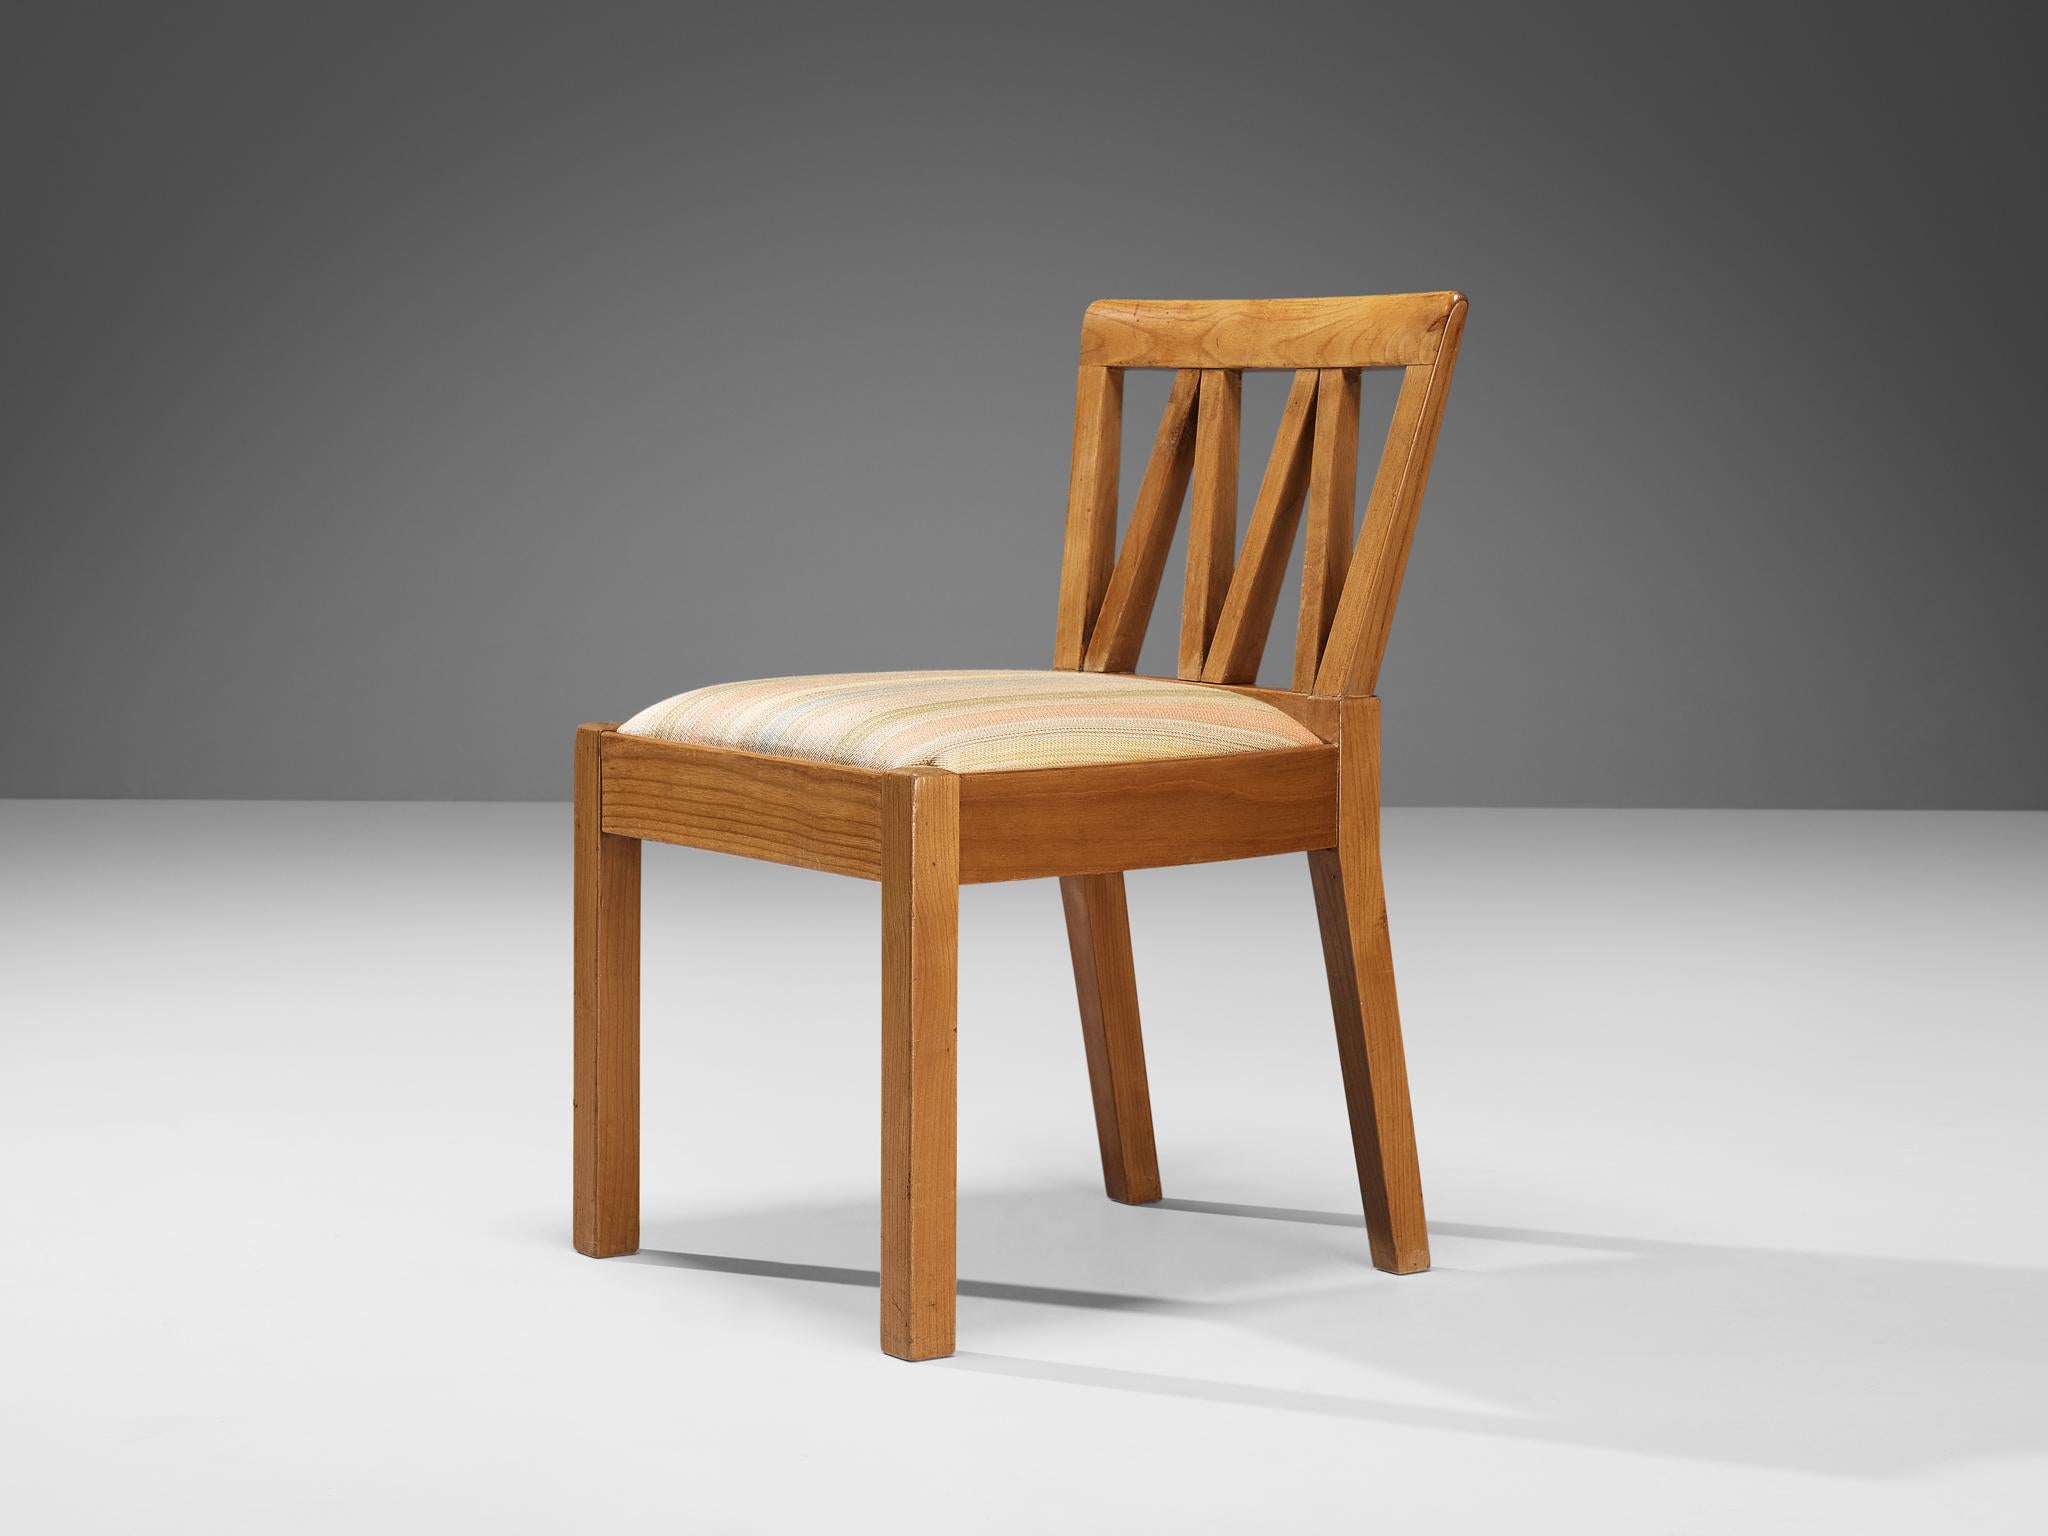 Italian Ugo Cara Chair with Geometrical Back in Cherry Wood